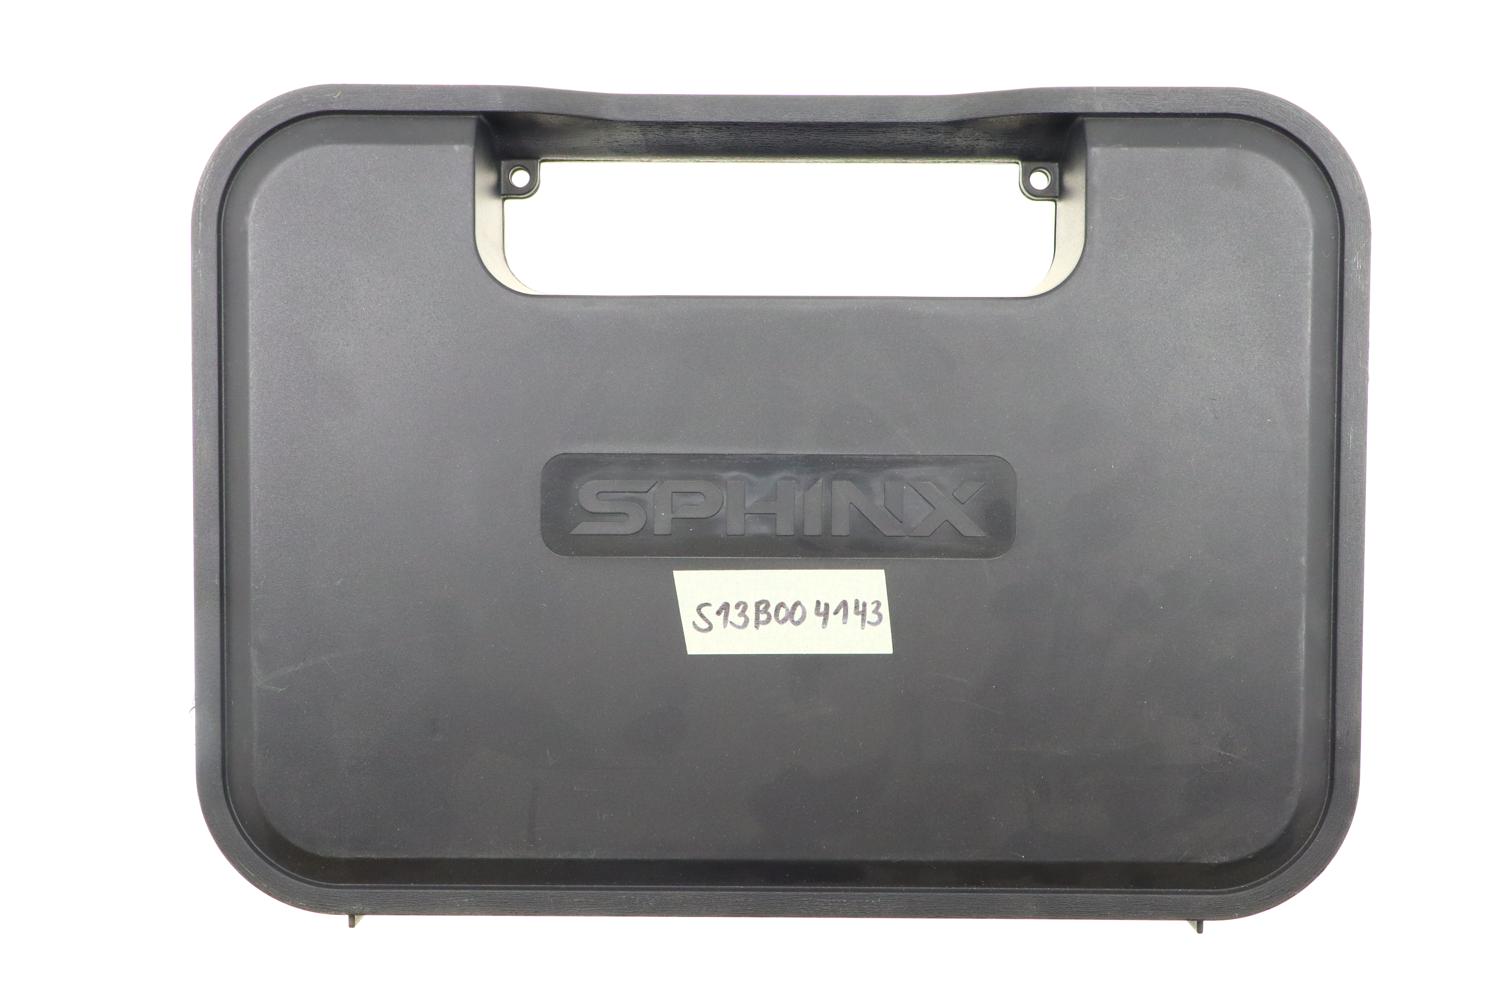 Swiss Sphinx SDP Compact, 9mmP, S13B004143, I-1268-img-8